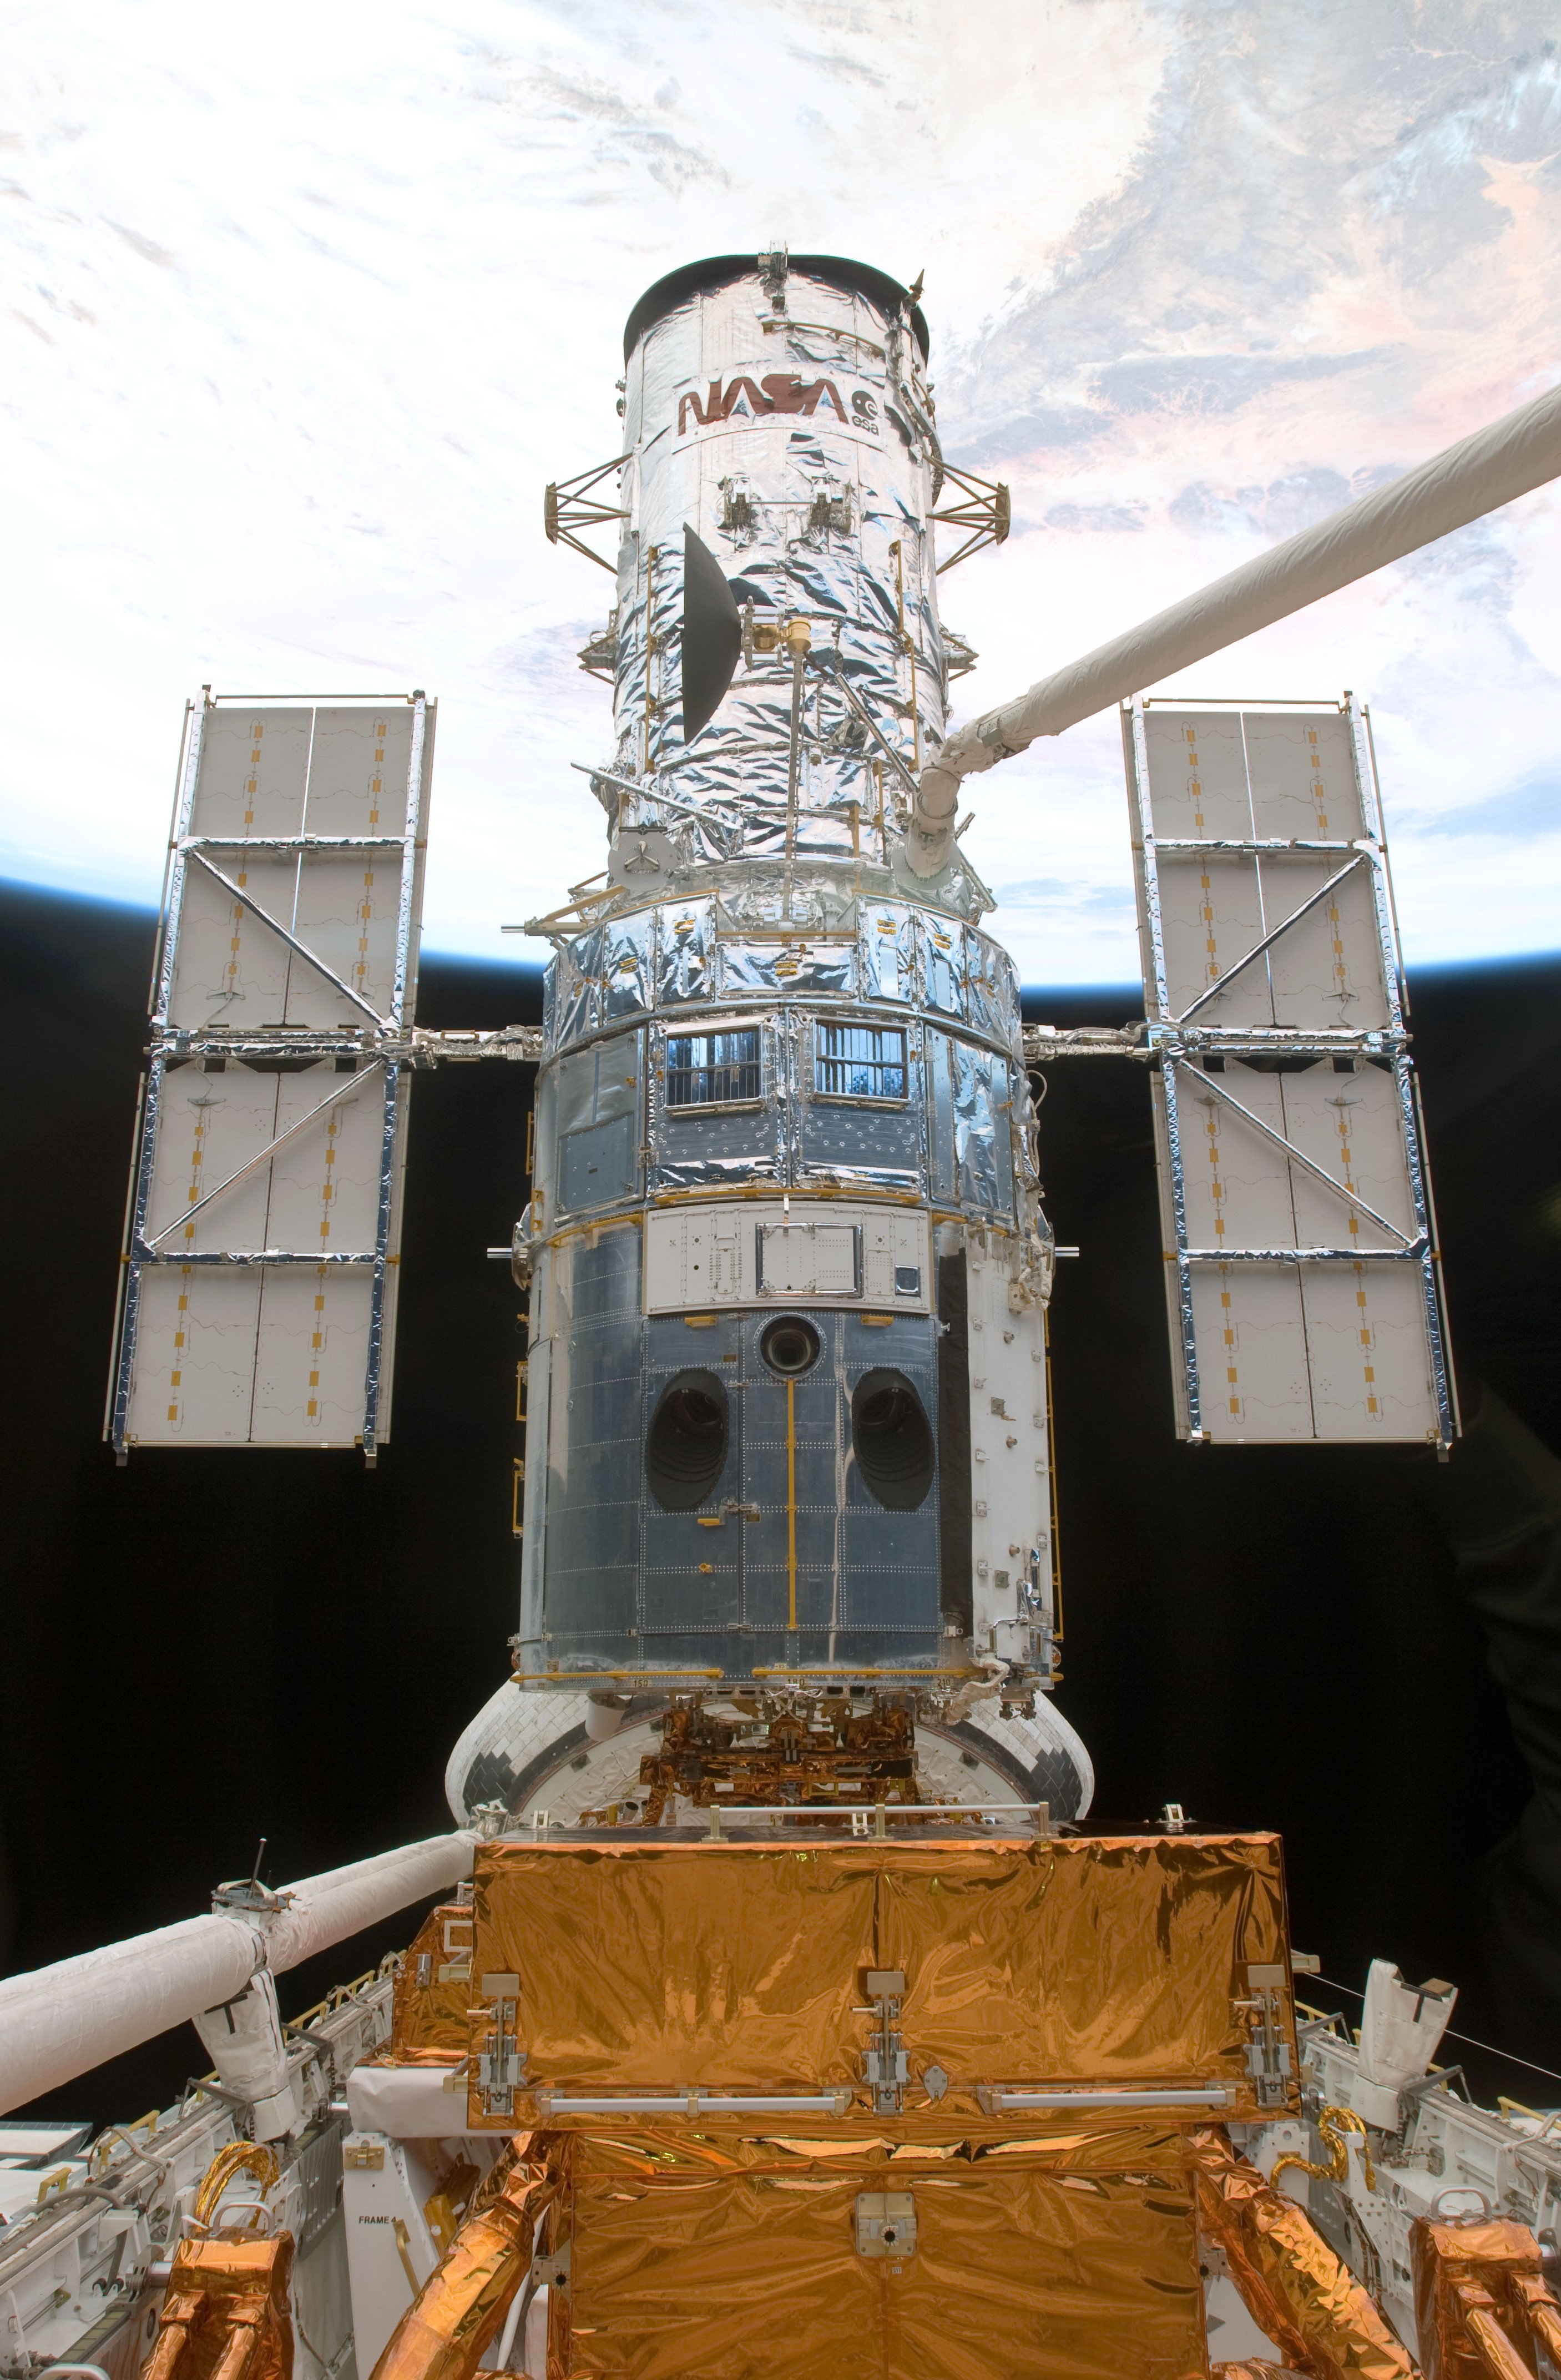 Astronaut K. Megan McArthur grapples the Hubble Space Telescope